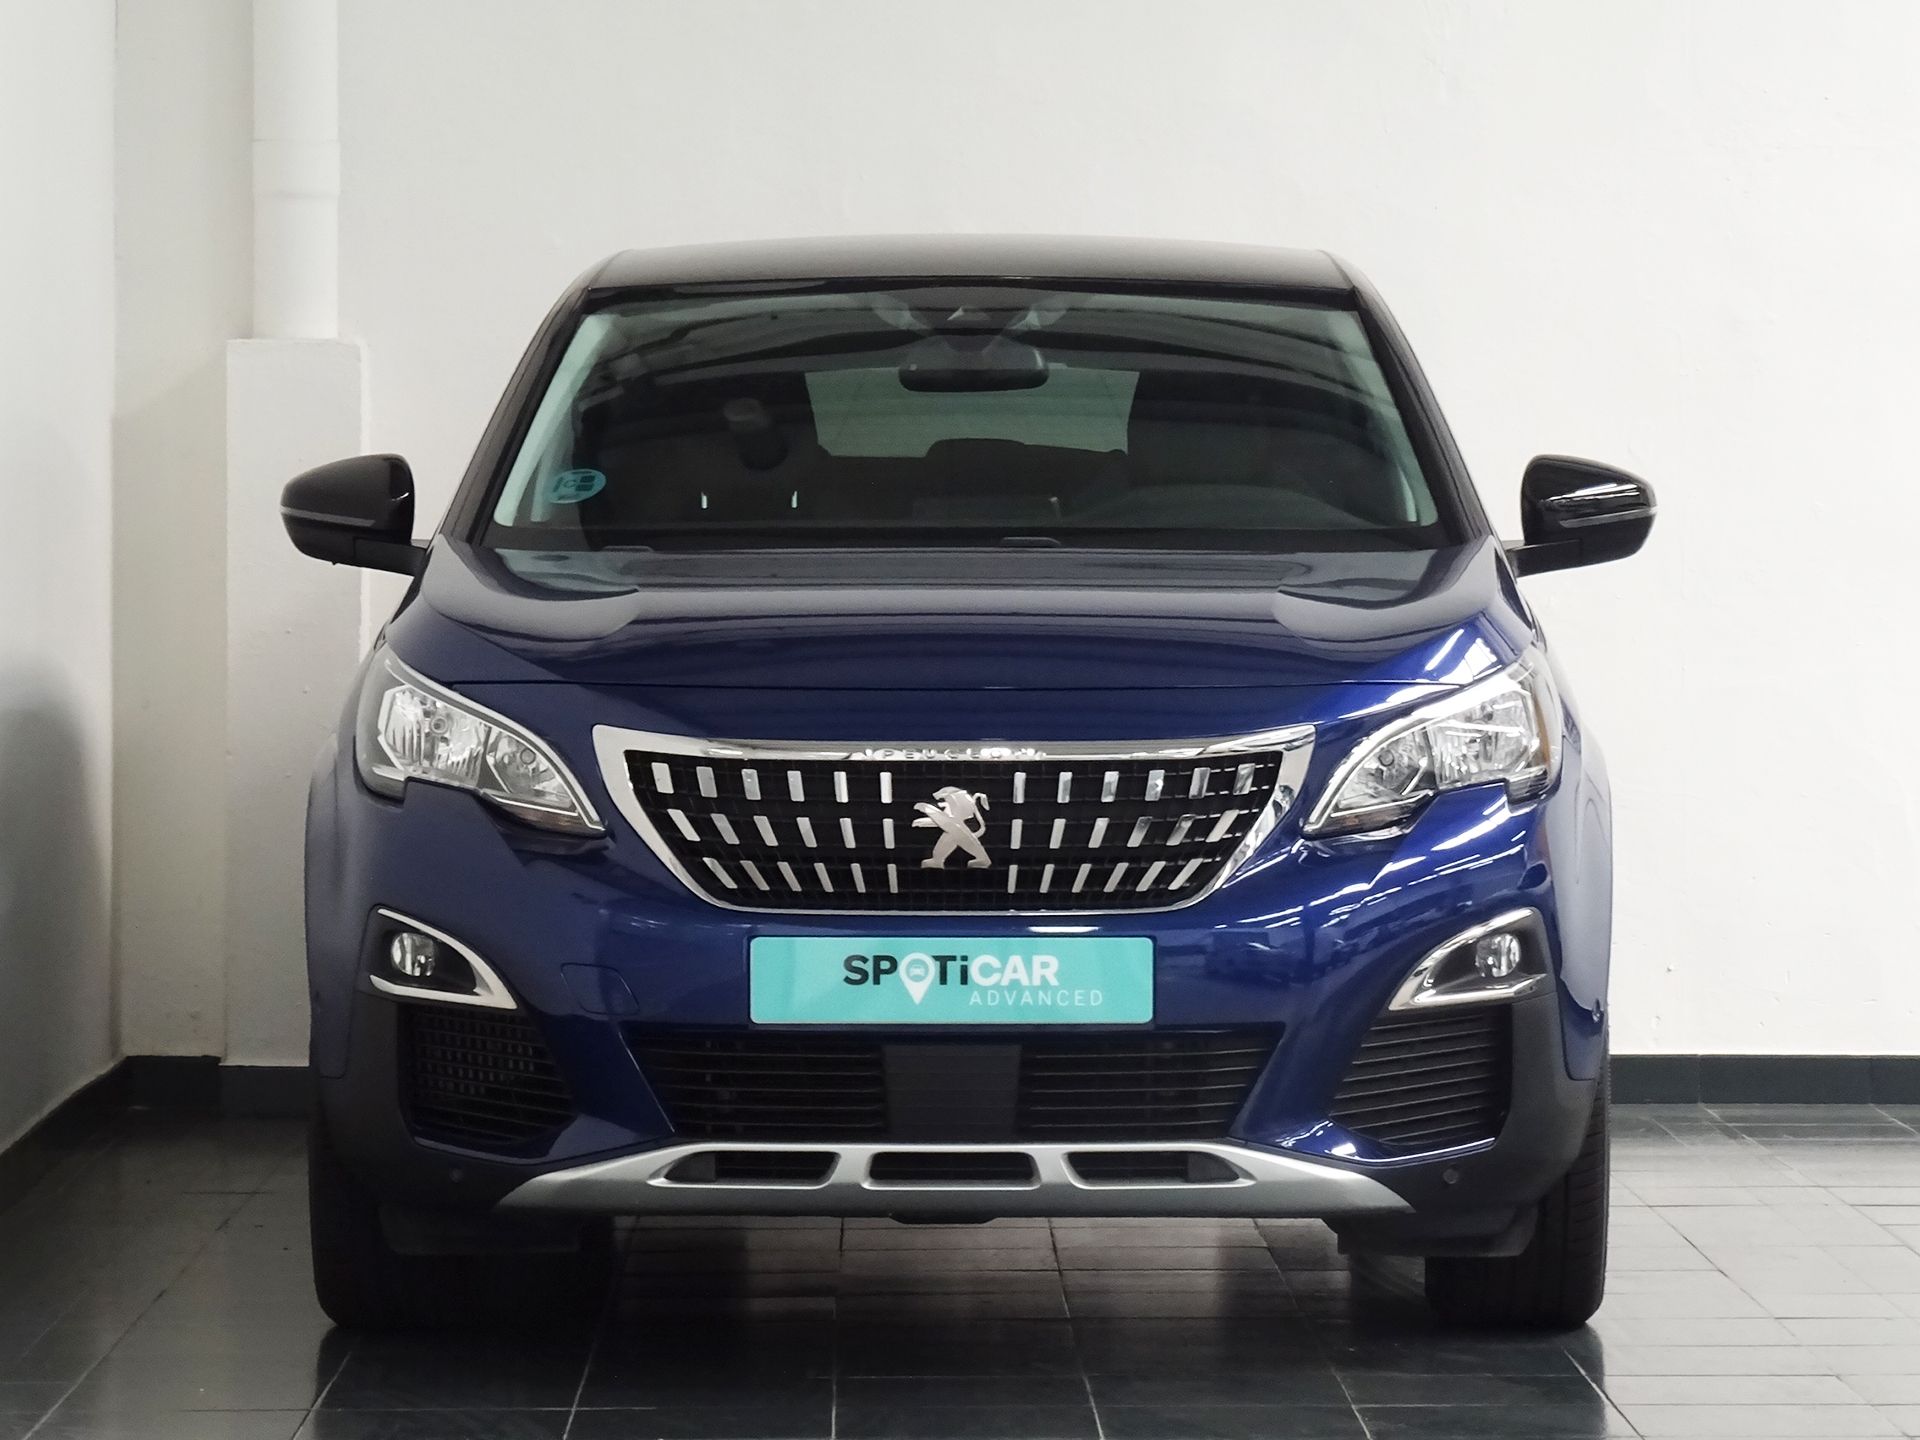 Peugeot 3008 1.5 BlueHDi 96kW (130CV) S&S Allure km0 por 29.000€